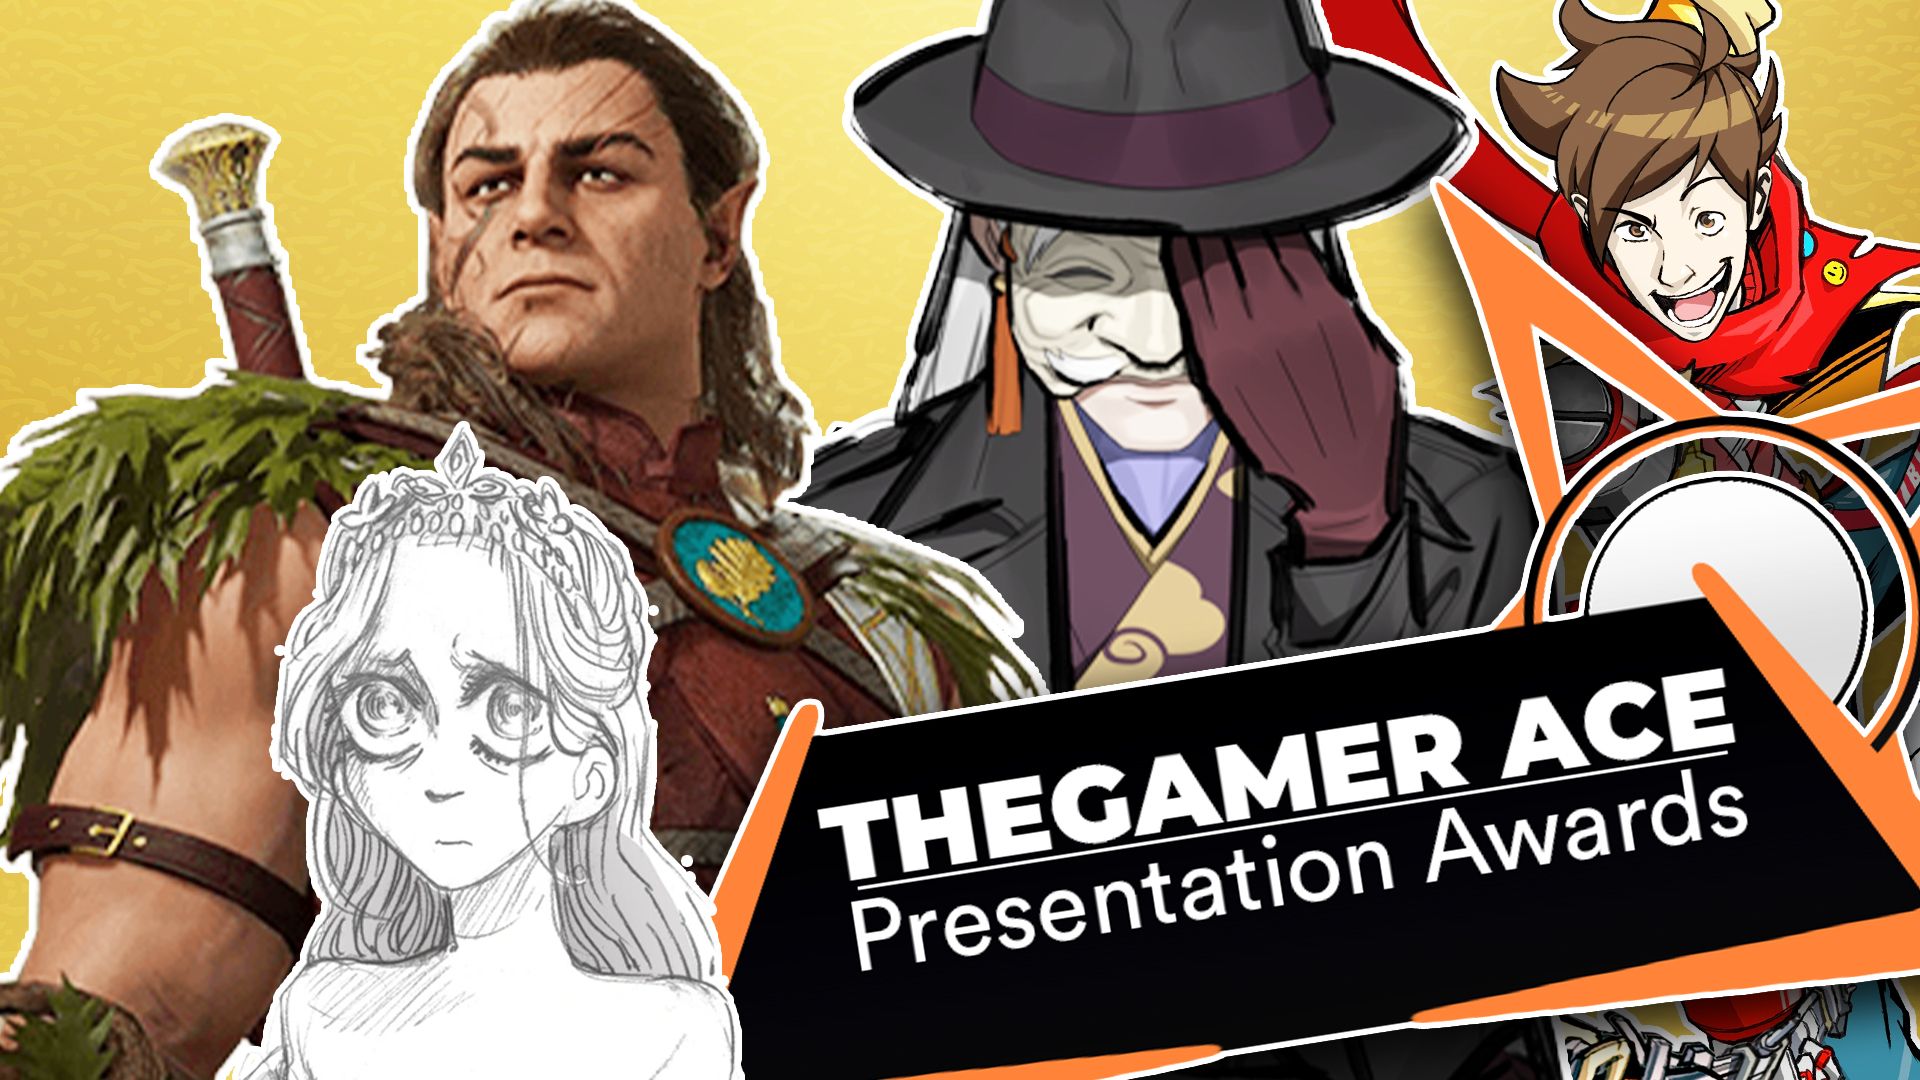 TheGamer Ace Presentation Awards YouTube